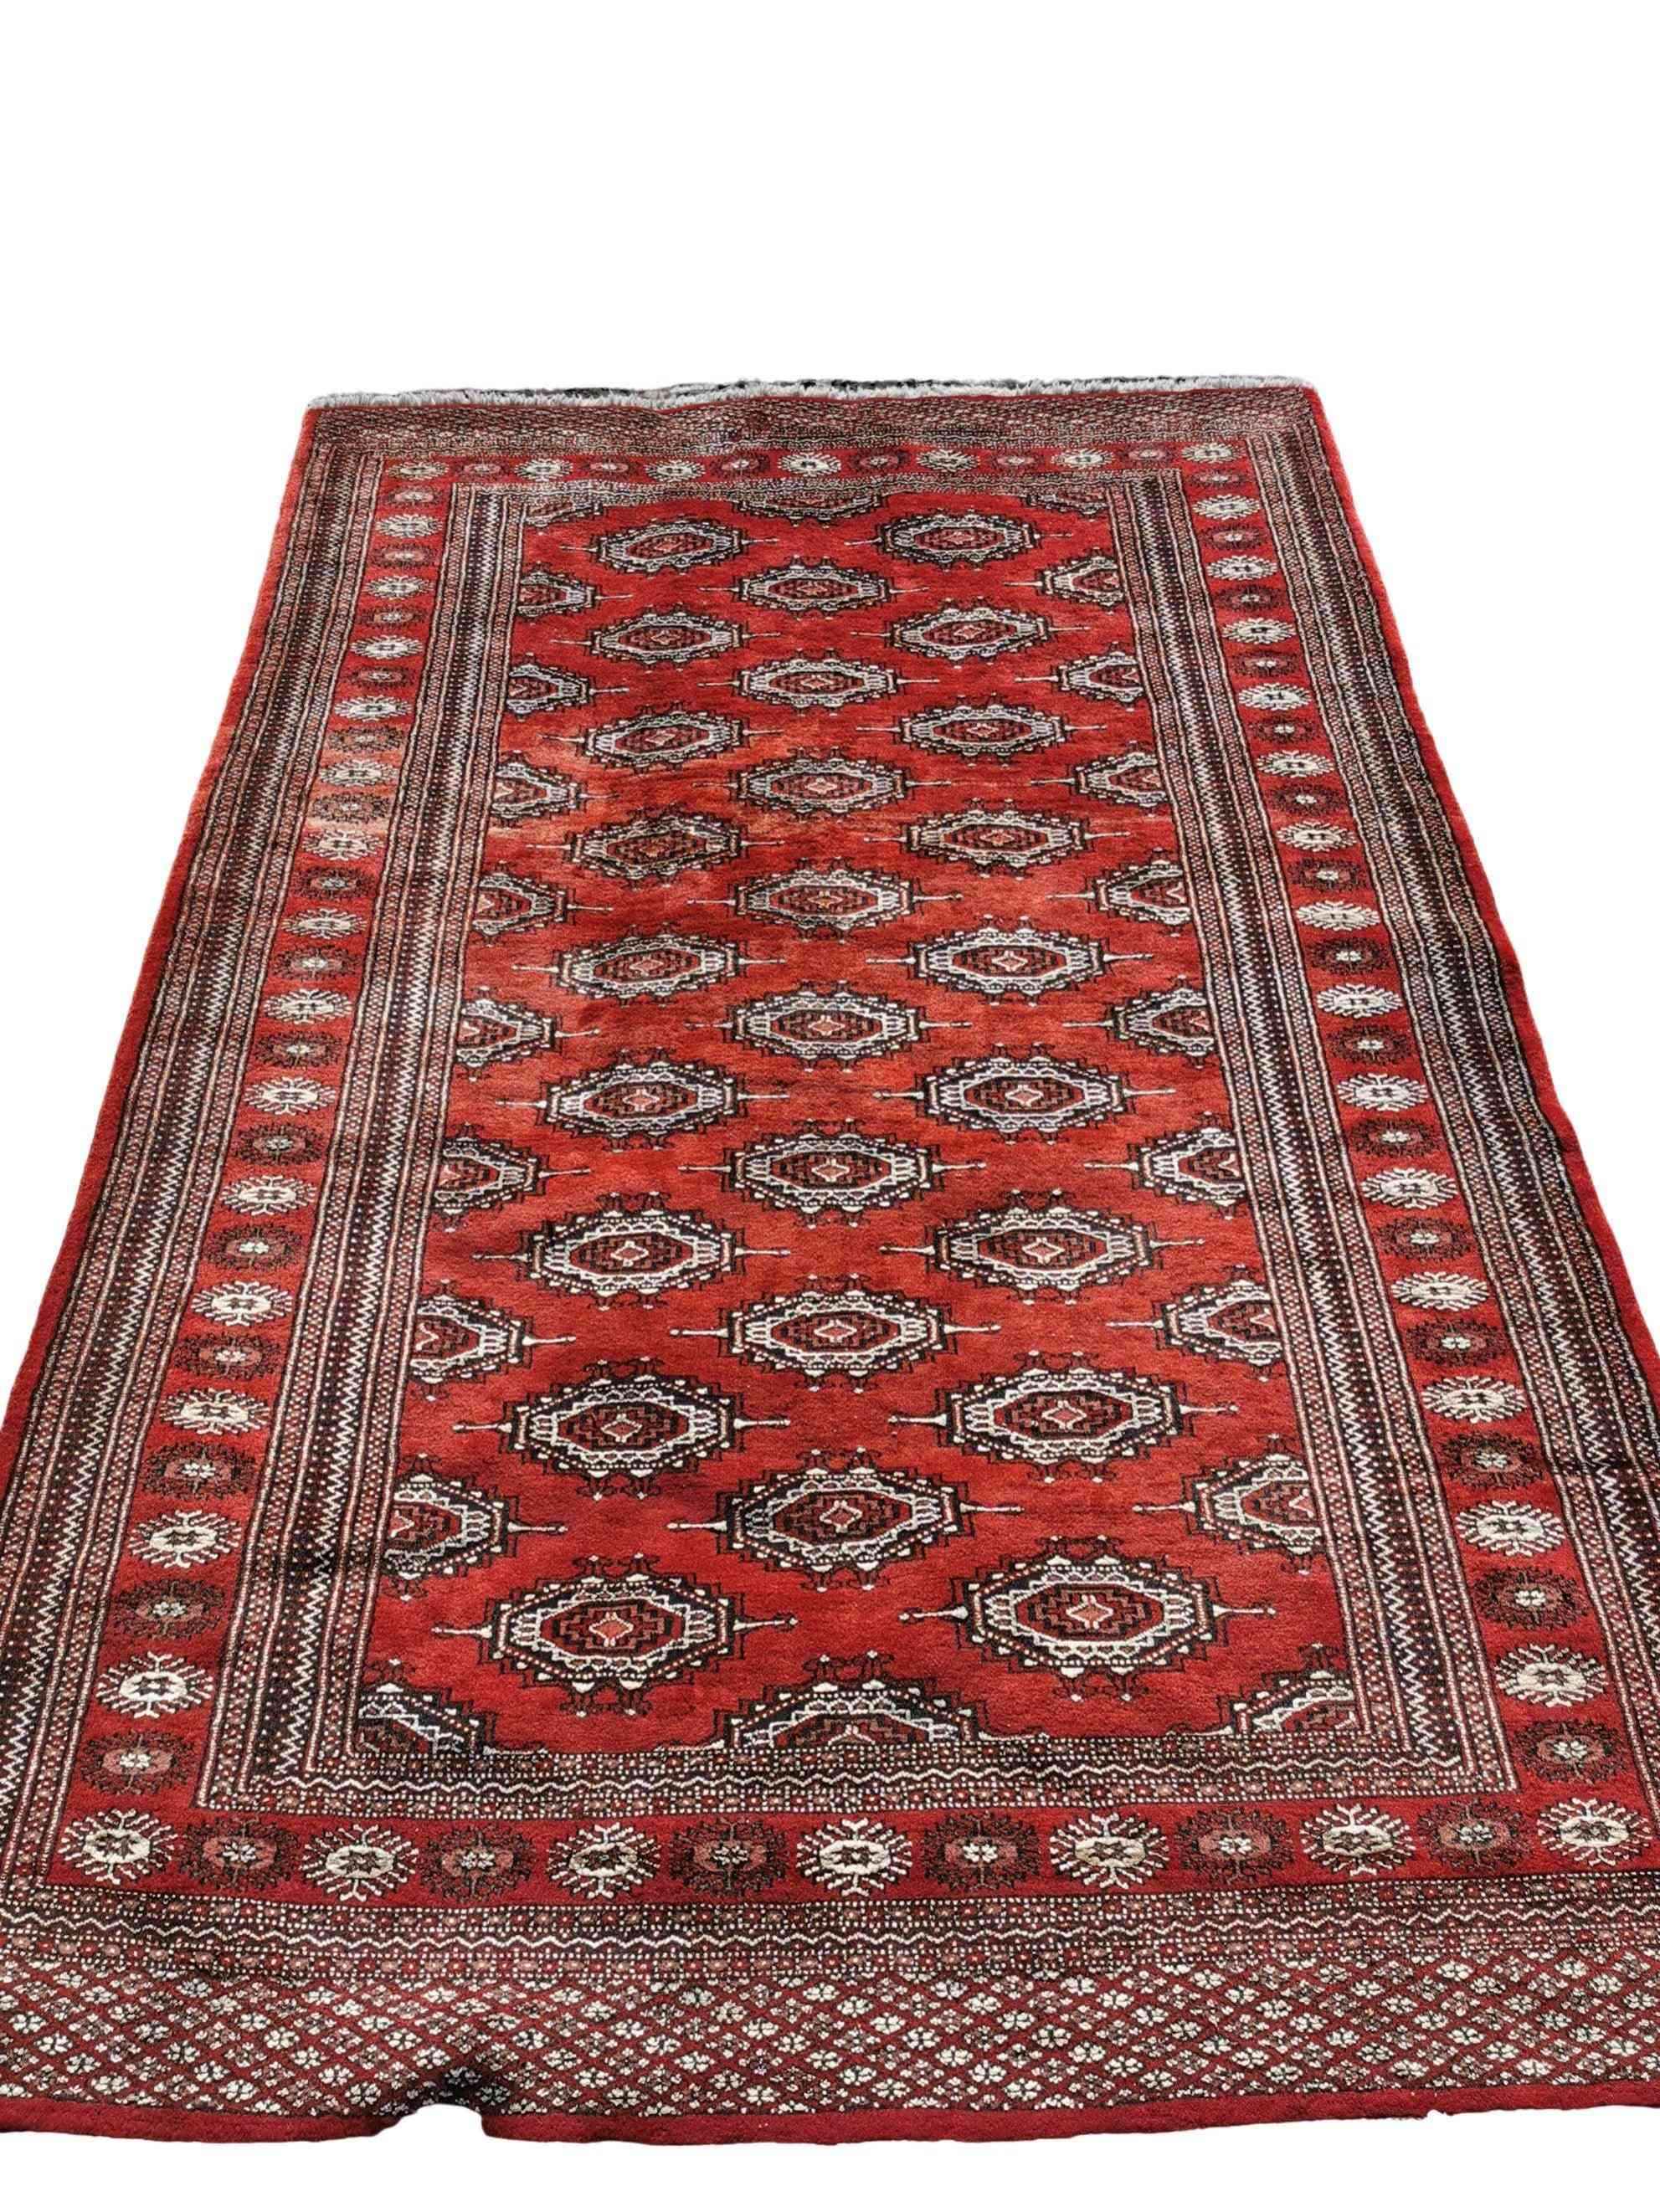 170 x 120 cm Bukhara silk & wool Geometric Red Rug - Rugmaster